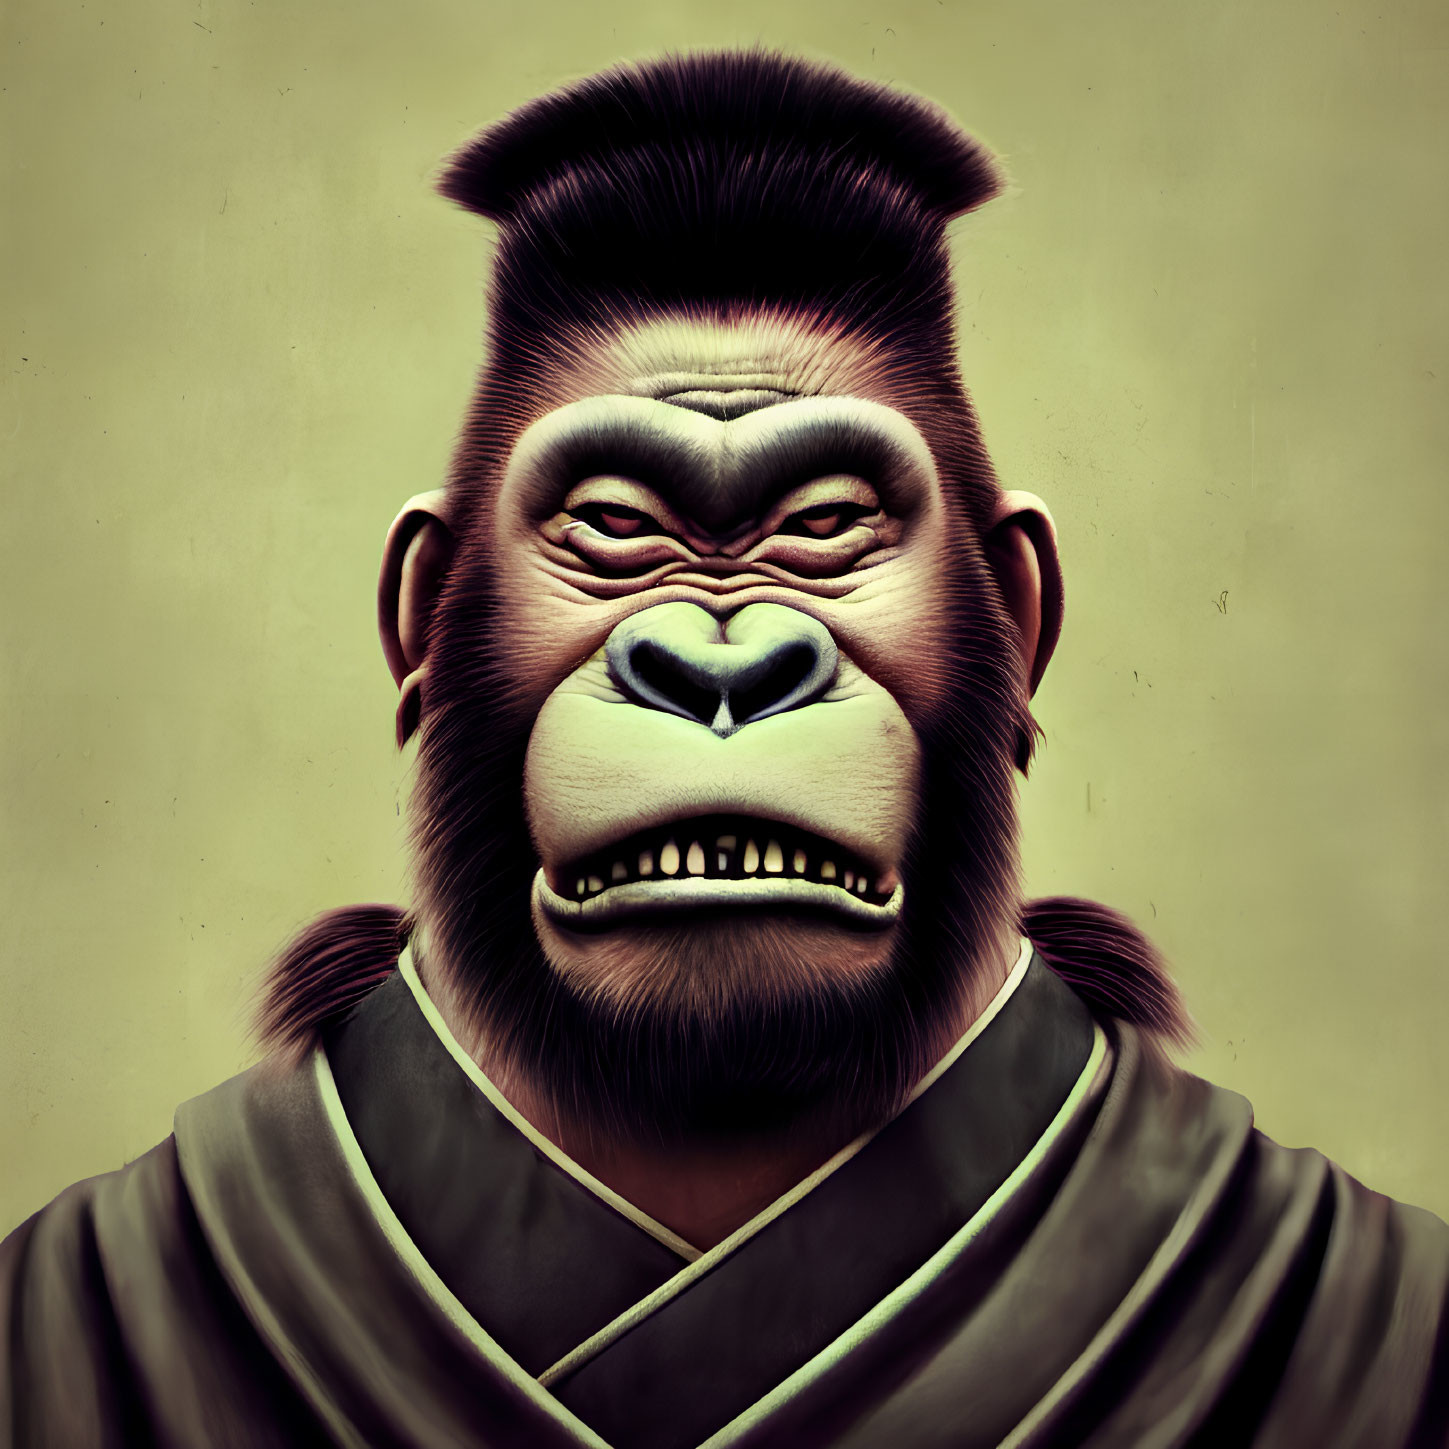 Stylized illustration of stern gorilla in traditional robe